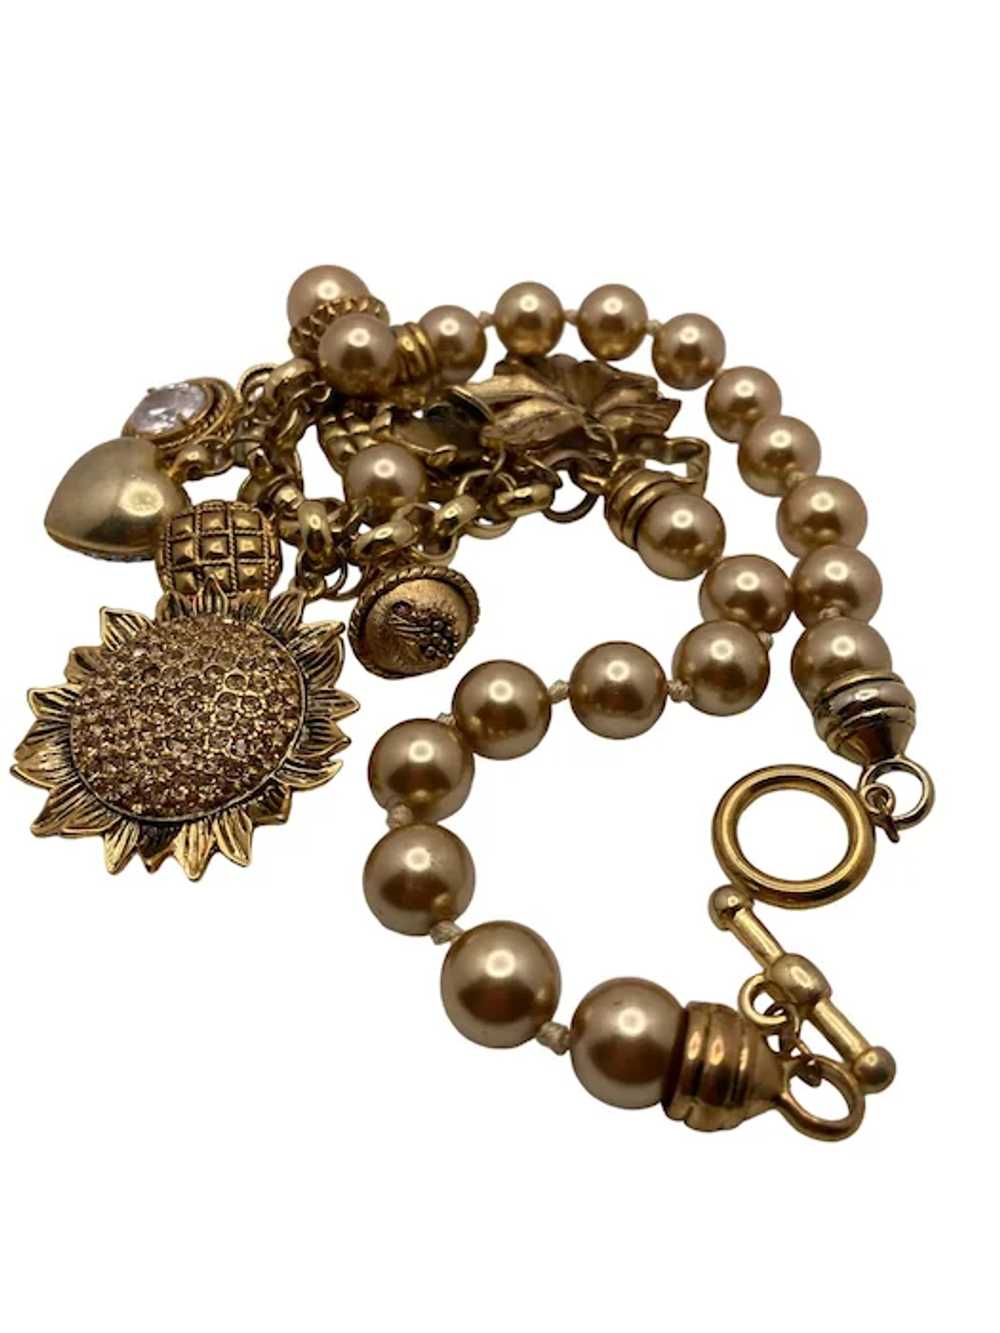 Gorgeous Gold Tone and Rhinestone Charm Necklace - image 4